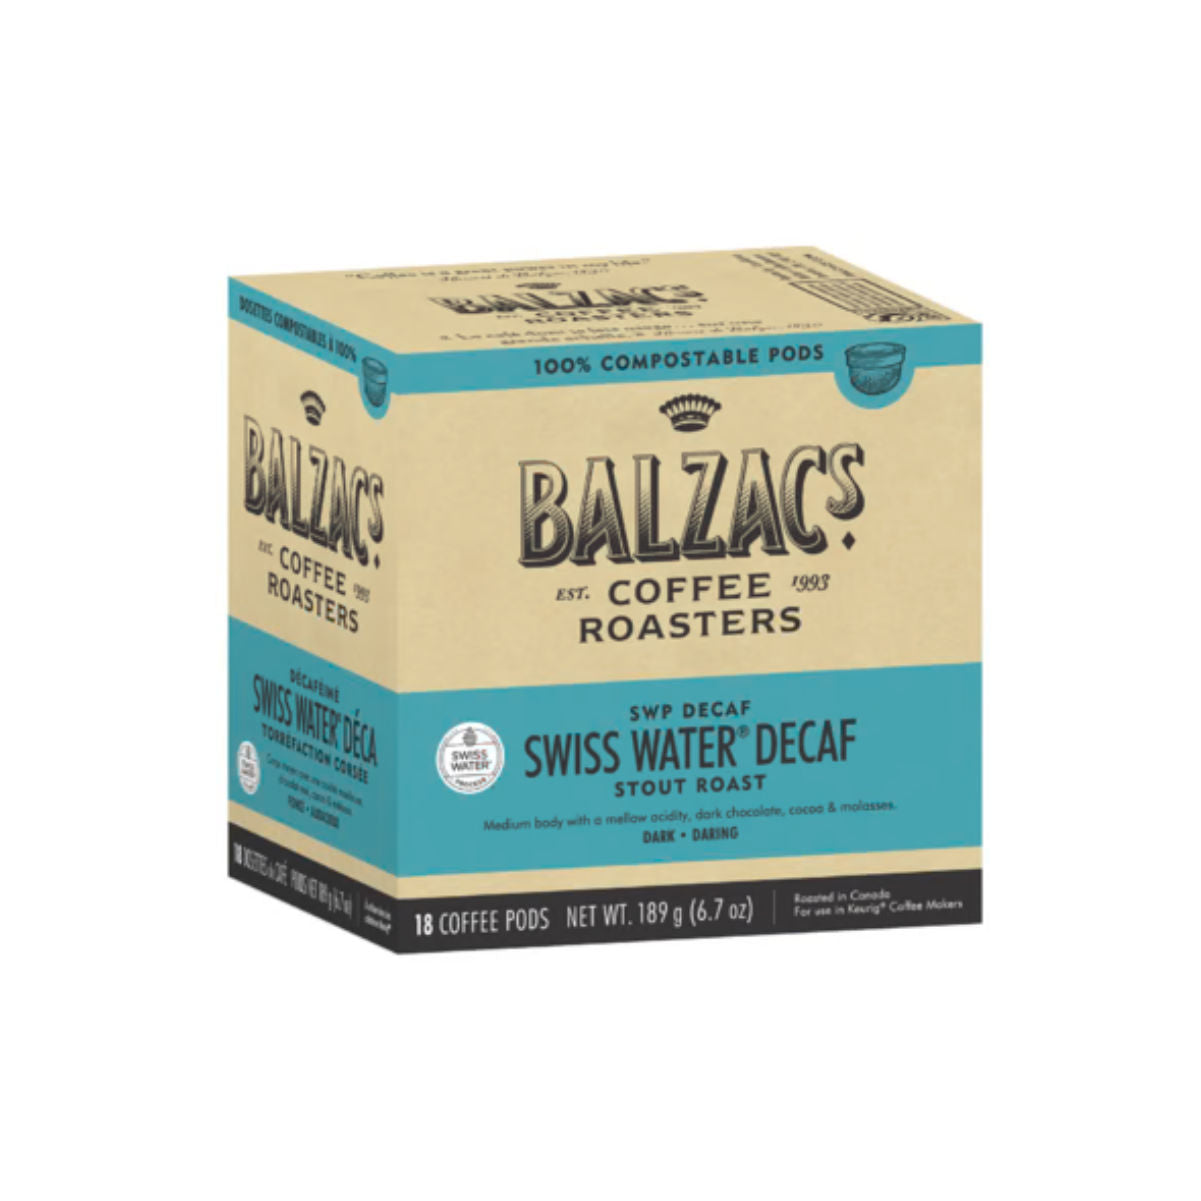 Balzac's SWP Decaf Single-Serve Coffee Pods (18 Count)